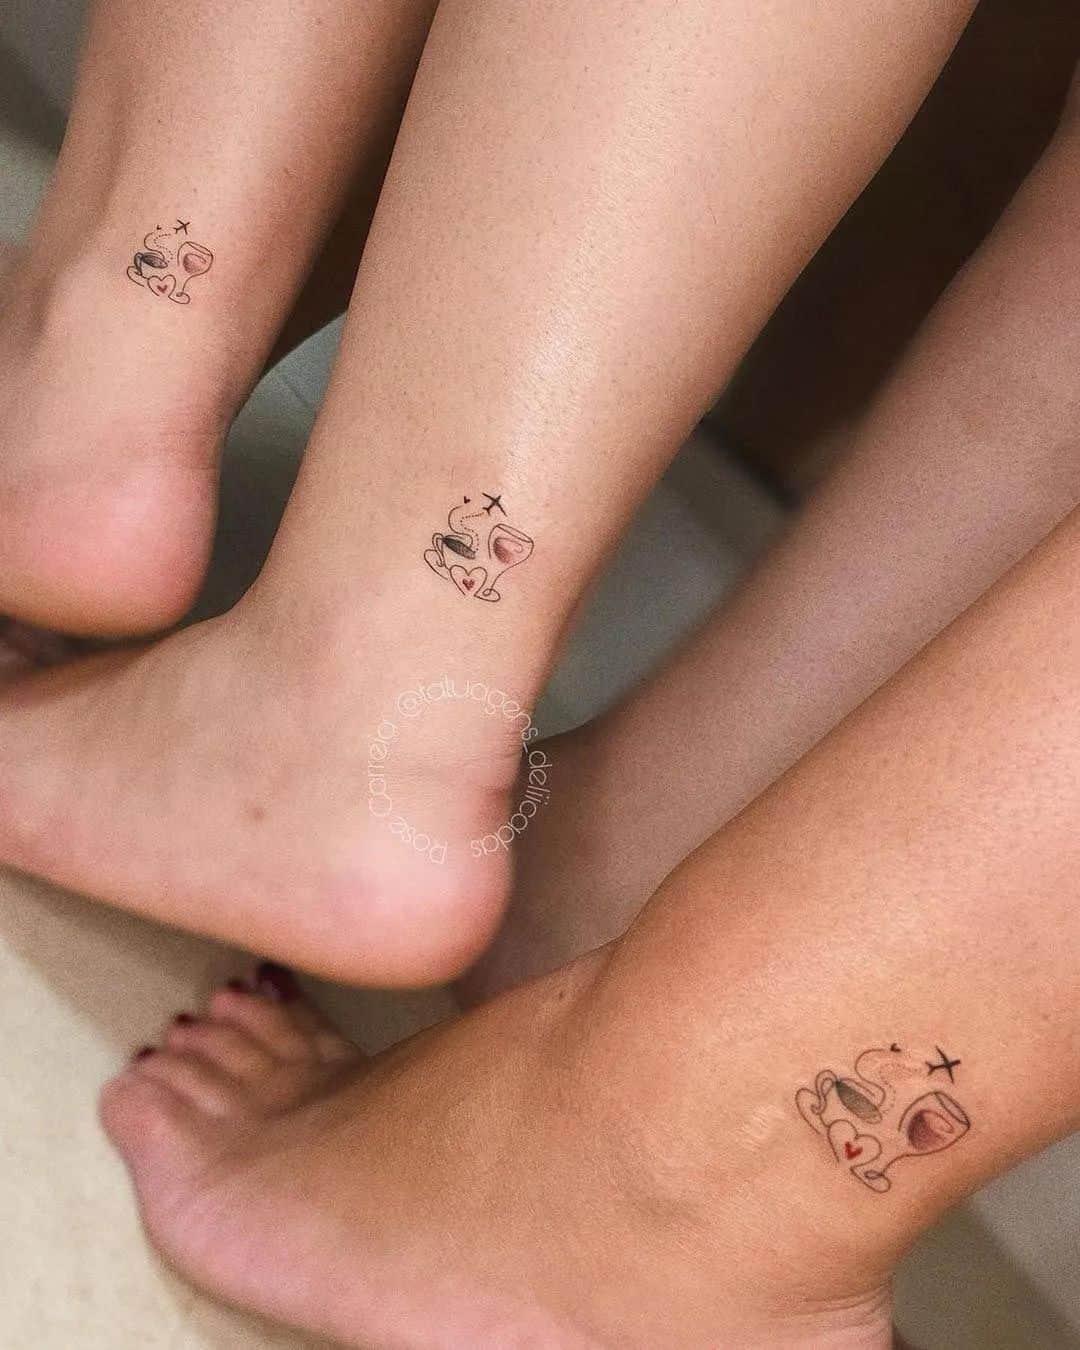 Amazing wine tattoo on leg by tinytattooinc